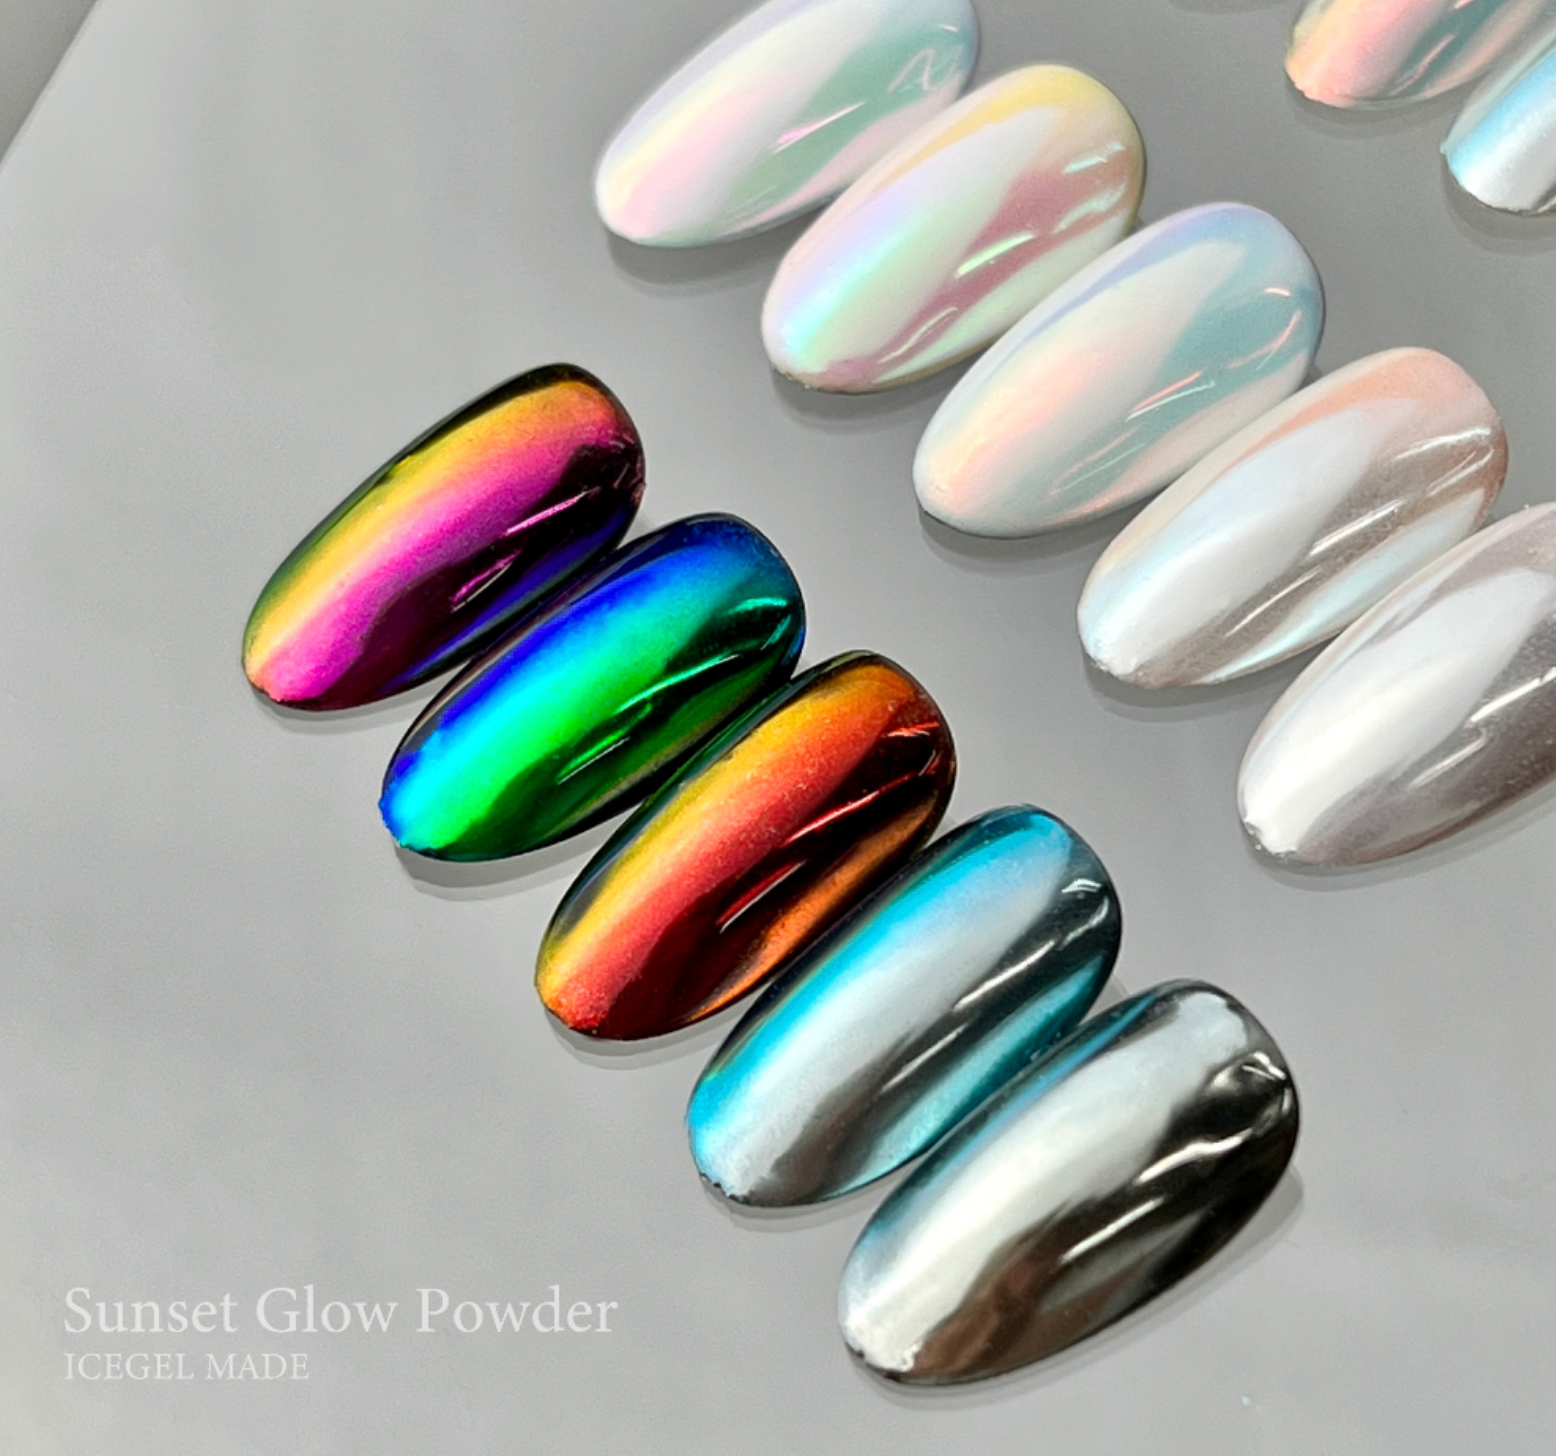 ICE GEL Sunset glow chrome powder - 6 colours